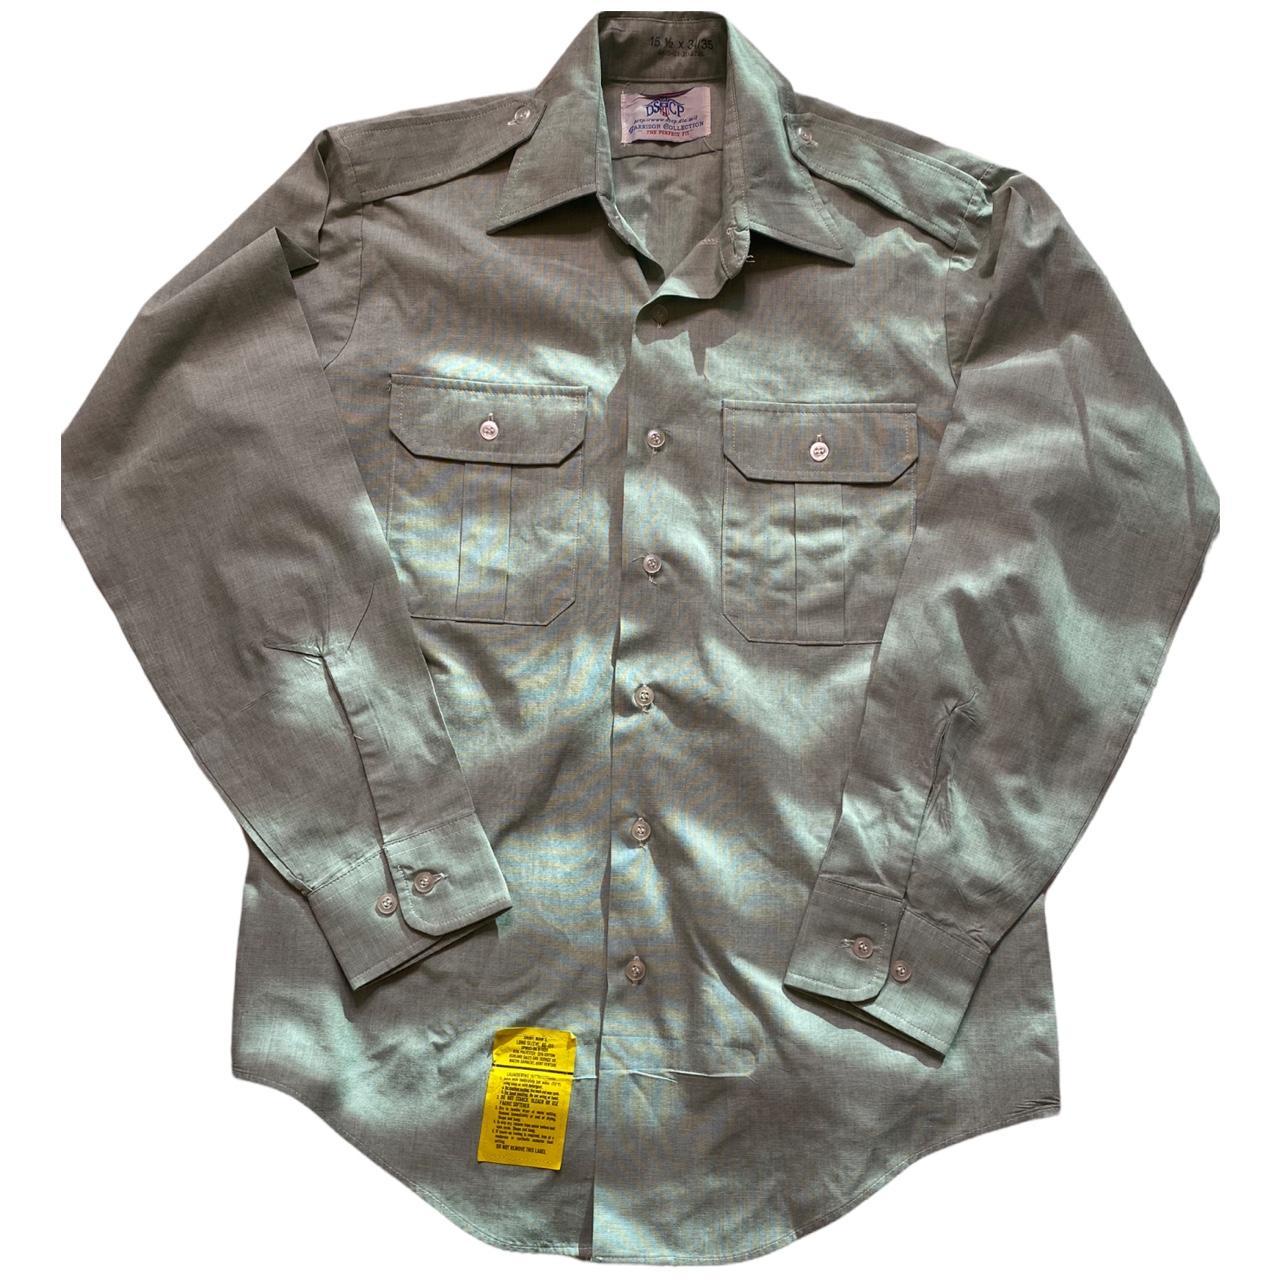 Vintage DSCP Military Shirt Garrison... - Depop